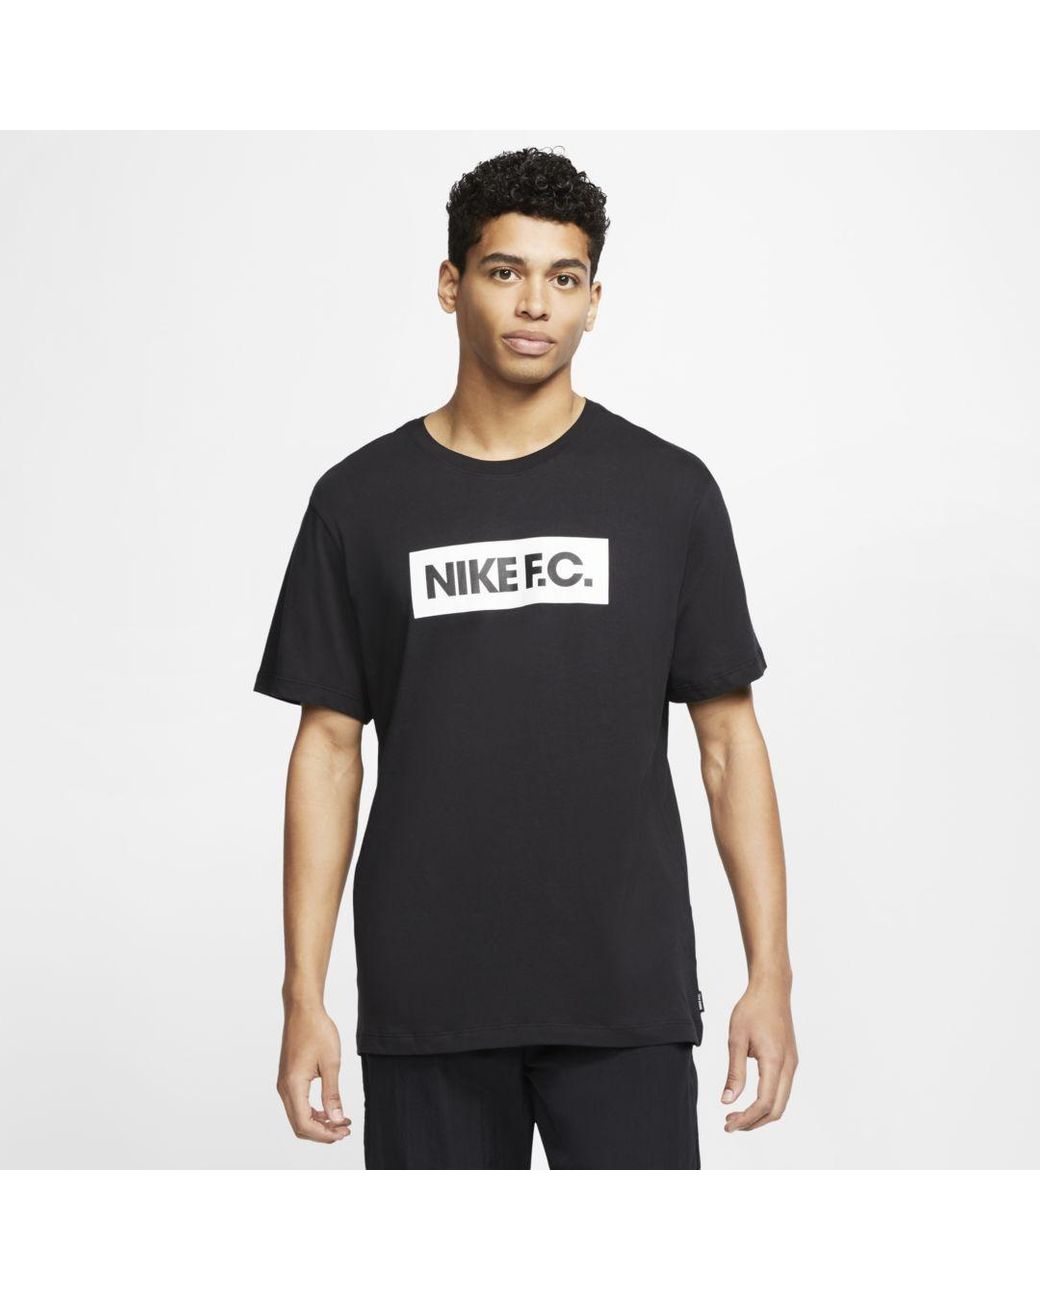 Nike Cotton F.c. Soccer T-shirt in Black for Men - Lyst